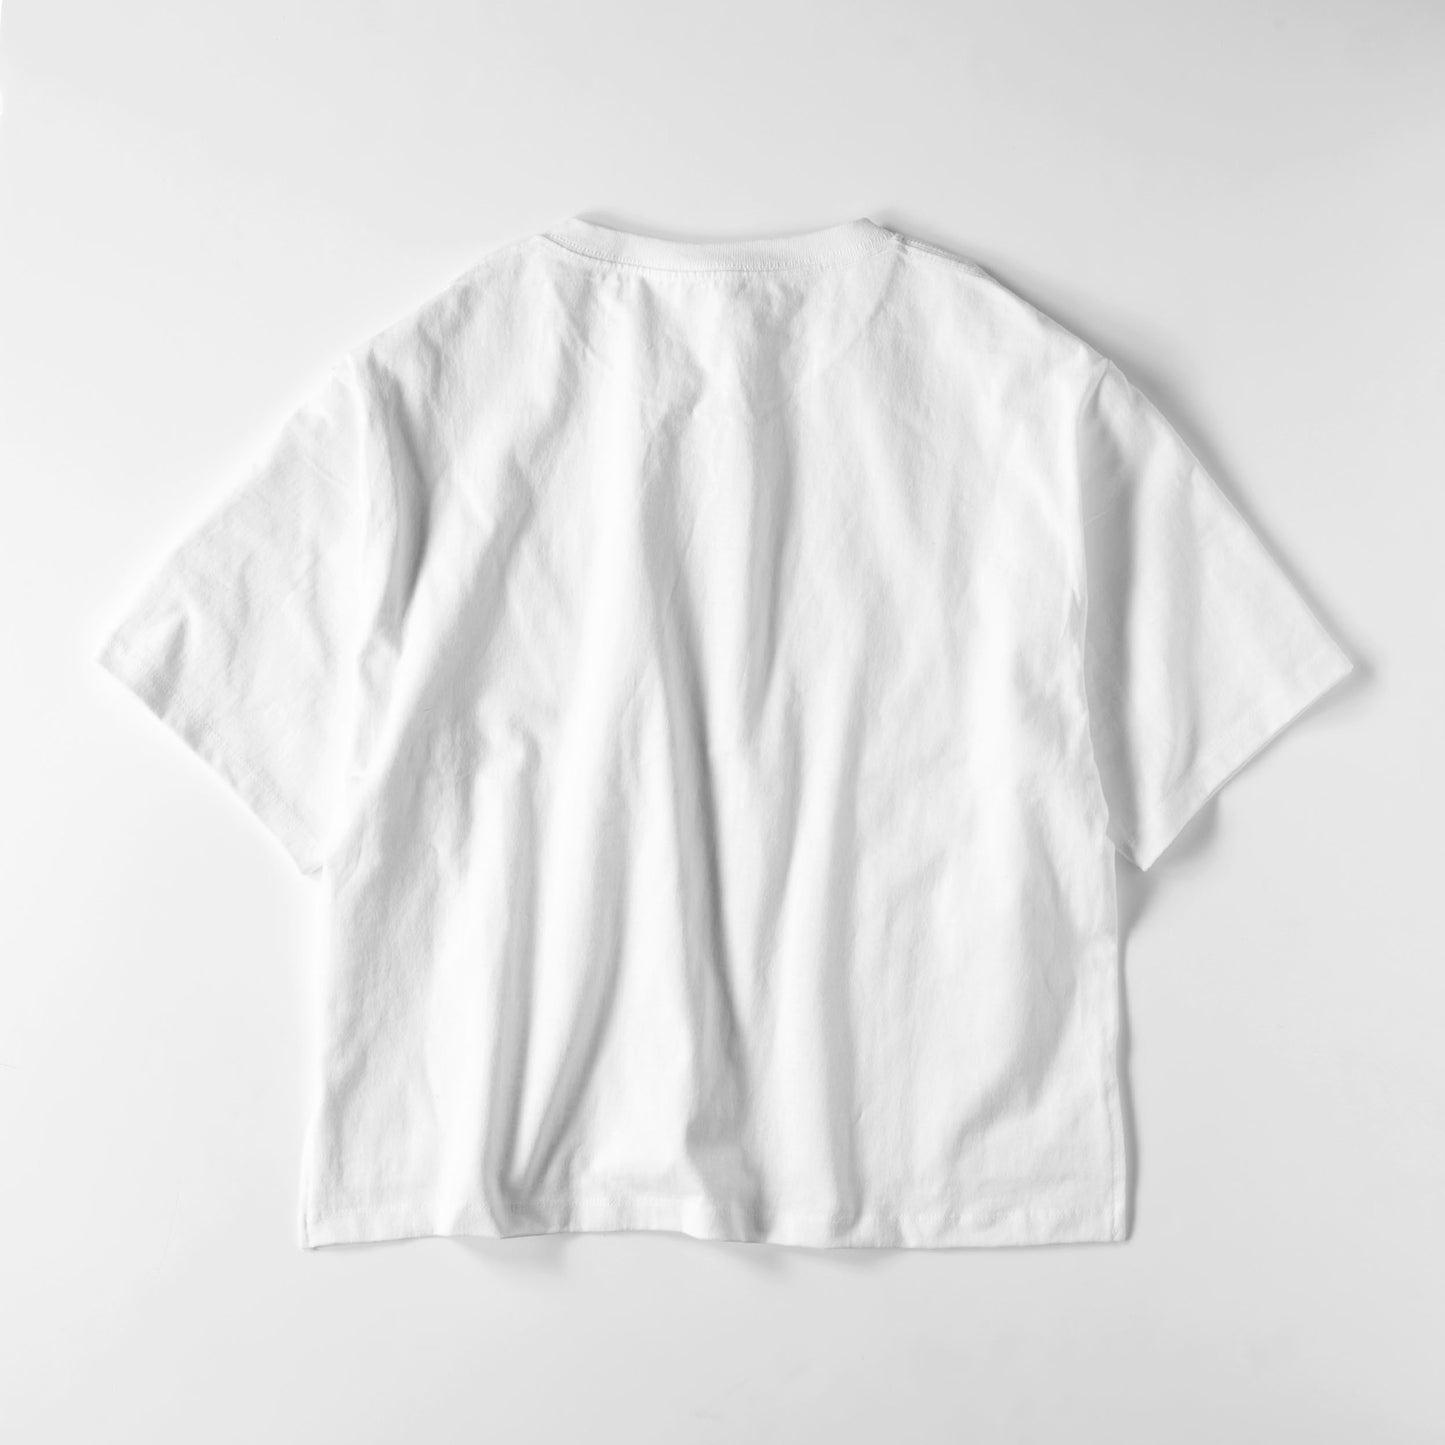 Oversized Silhouette T-shirt 01